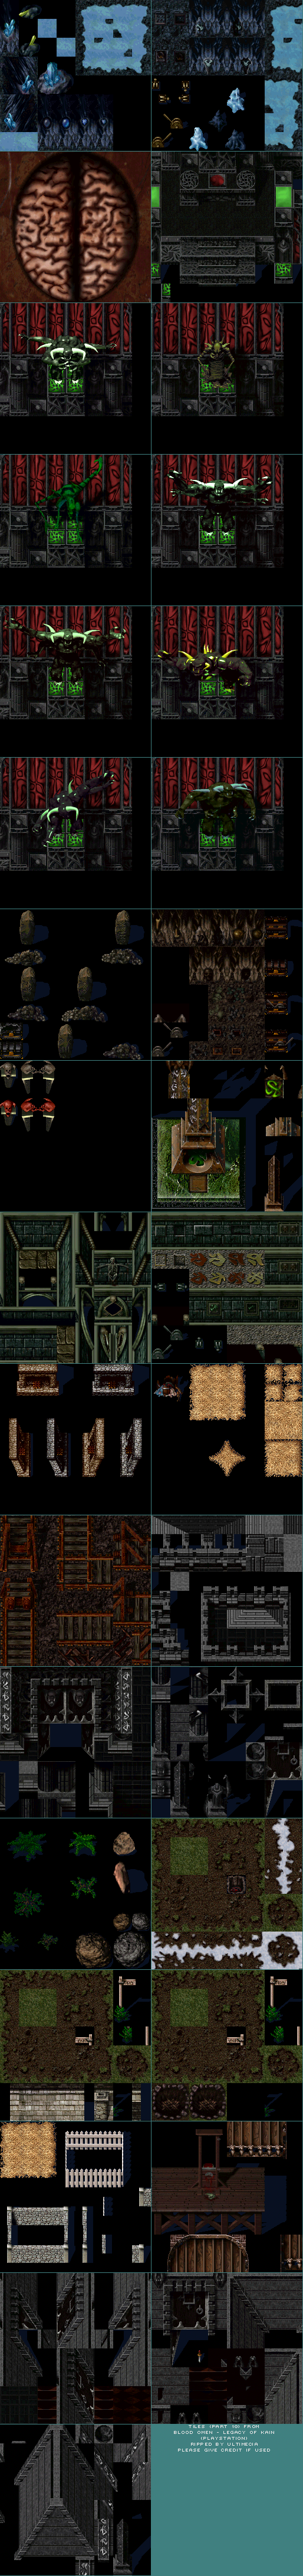 Legacy of Kain: Blood Omen - Tiles 10